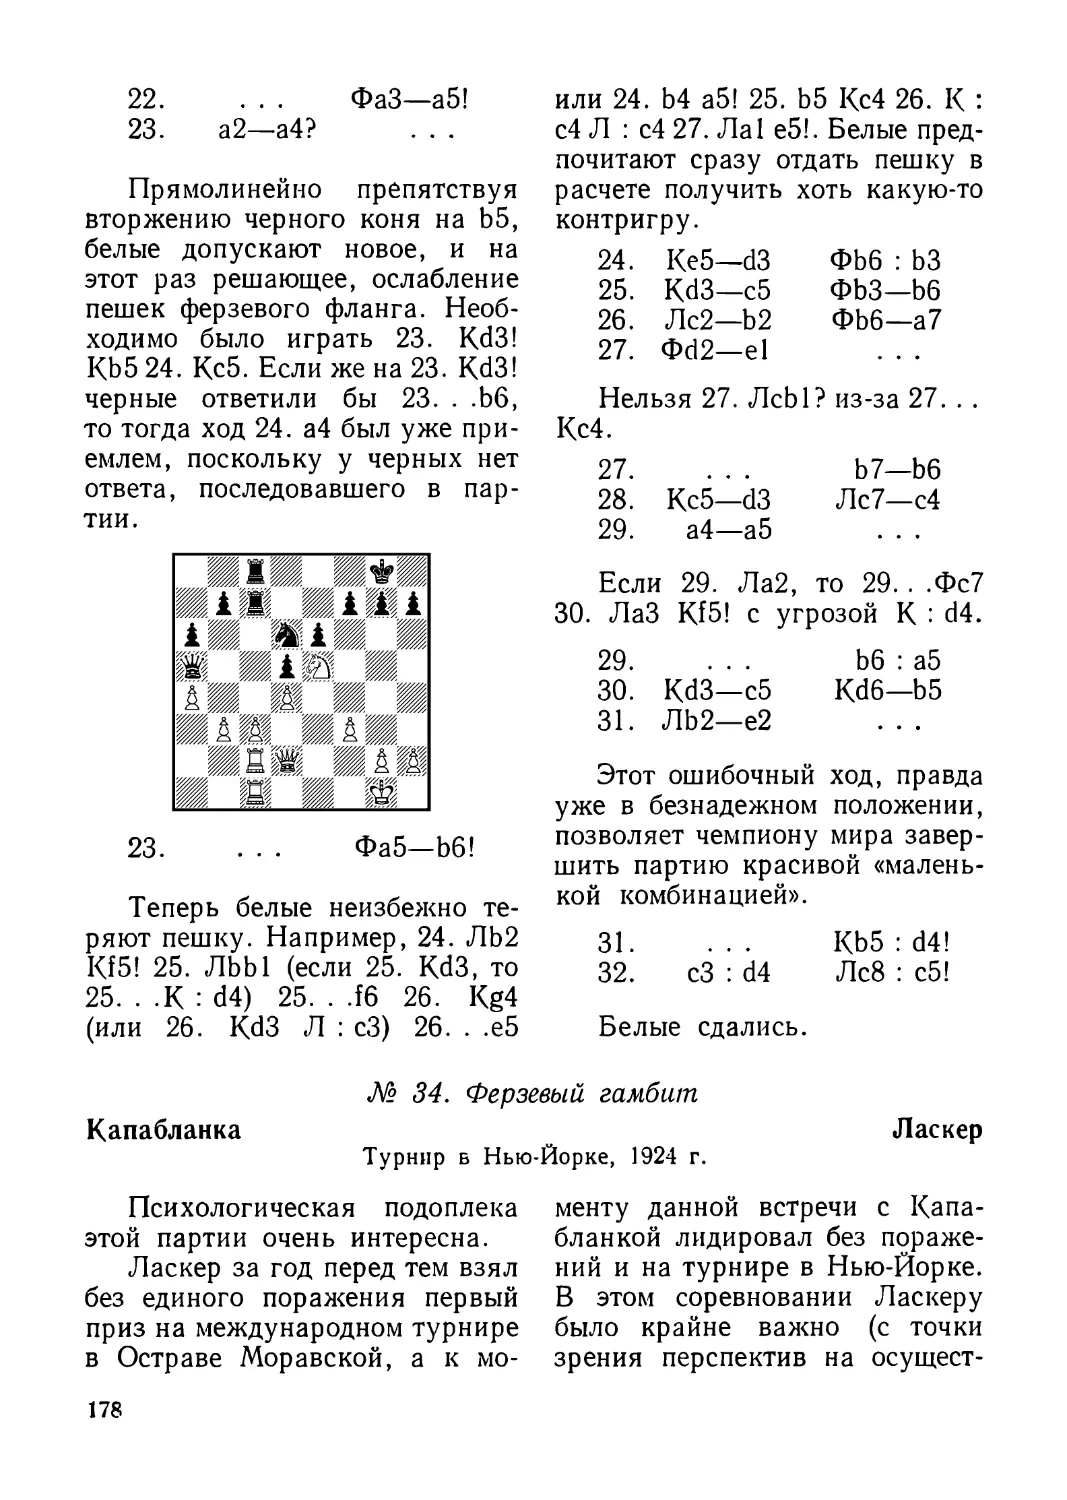 34.Капабланка — Ласкер, турнир в Нью-Йорке 1924 г.